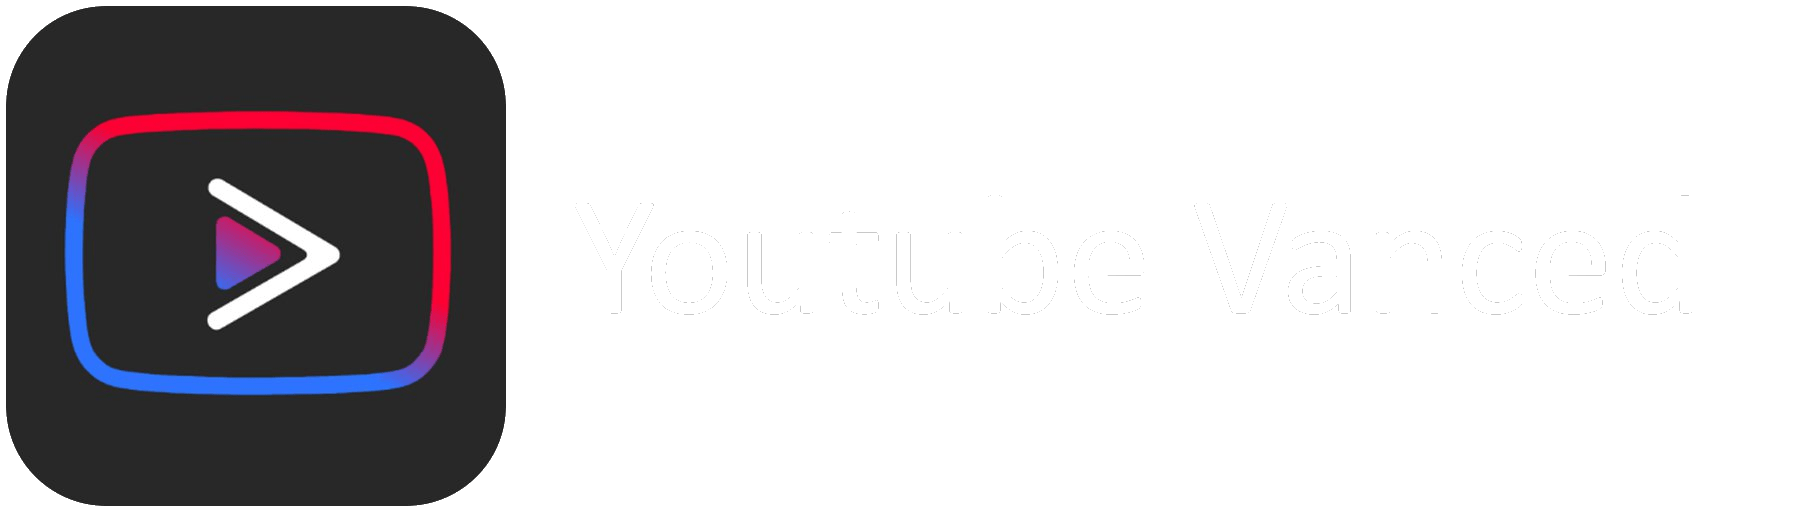 youtube vanced ultima version 2021